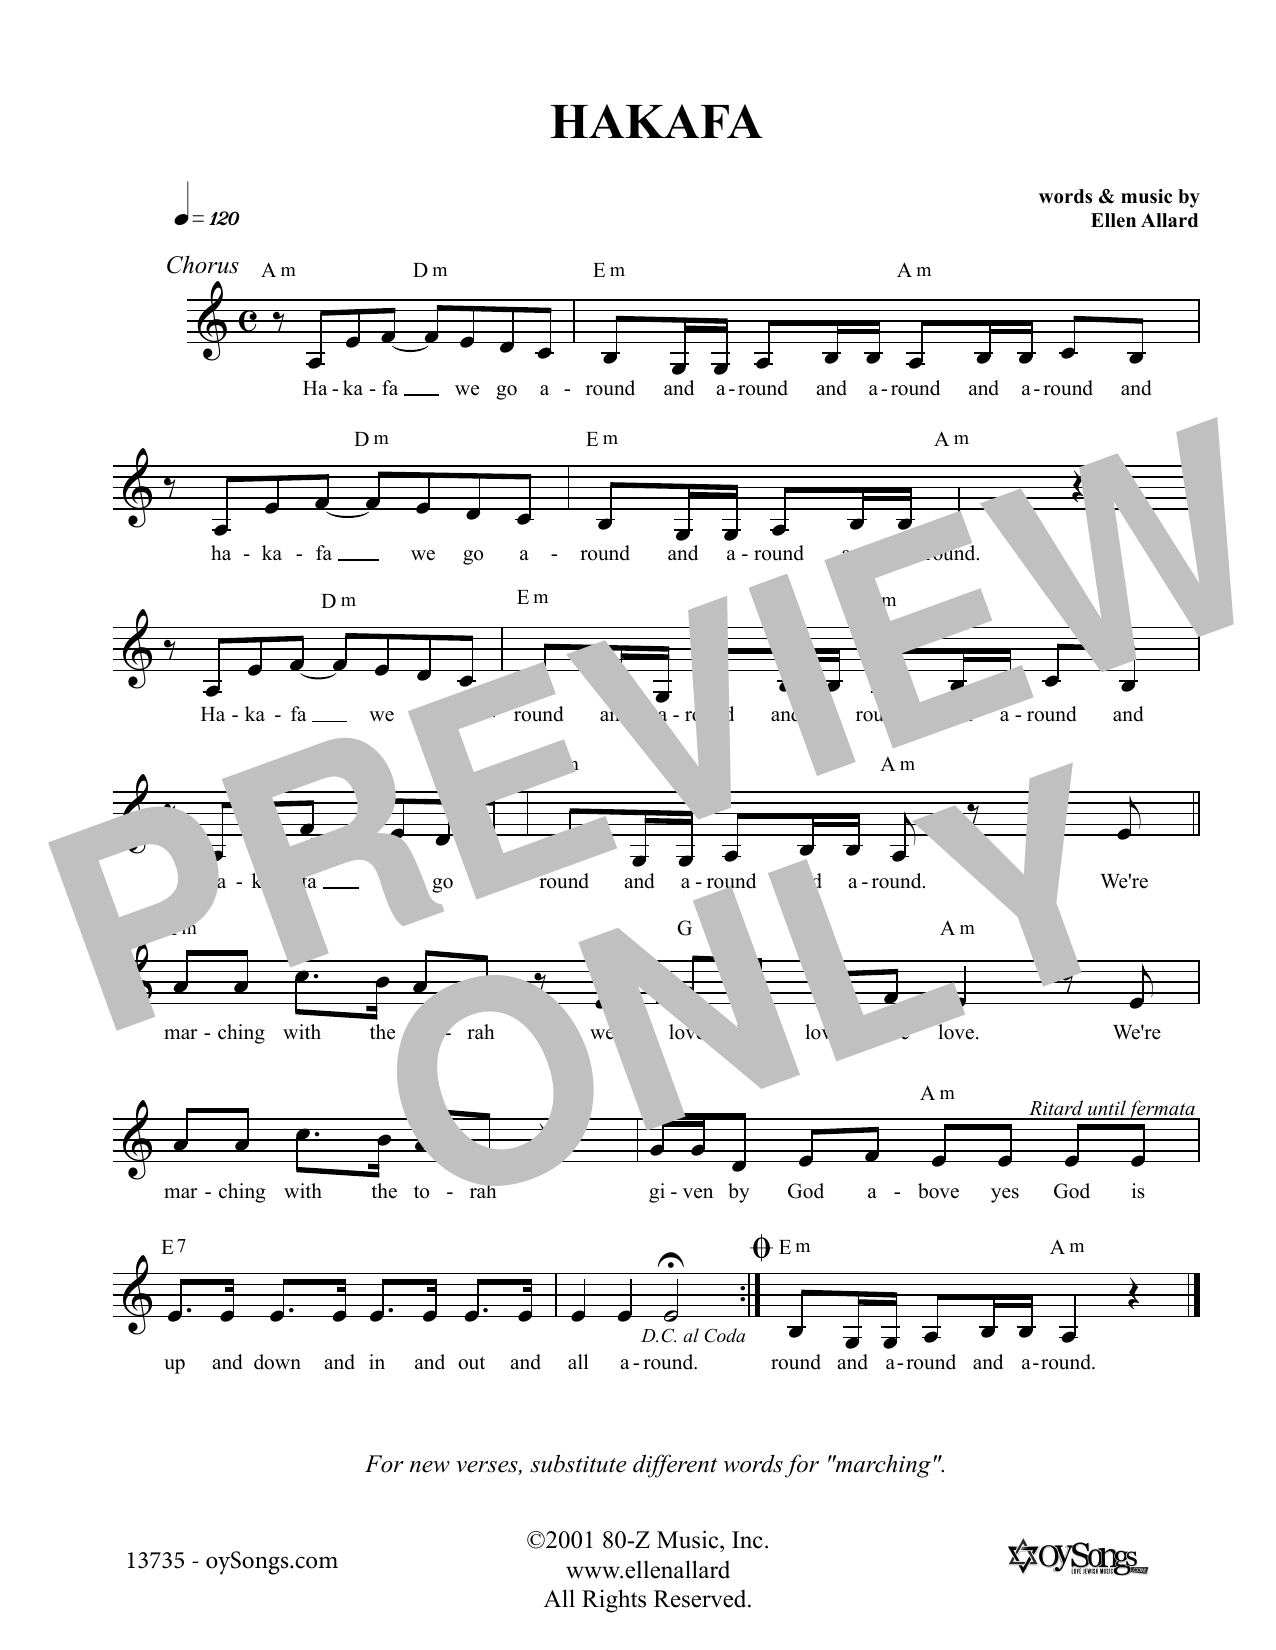 Ellen Allard Hakafa Sheet Music Notes & Chords for Melody Line, Lyrics & Chords - Download or Print PDF